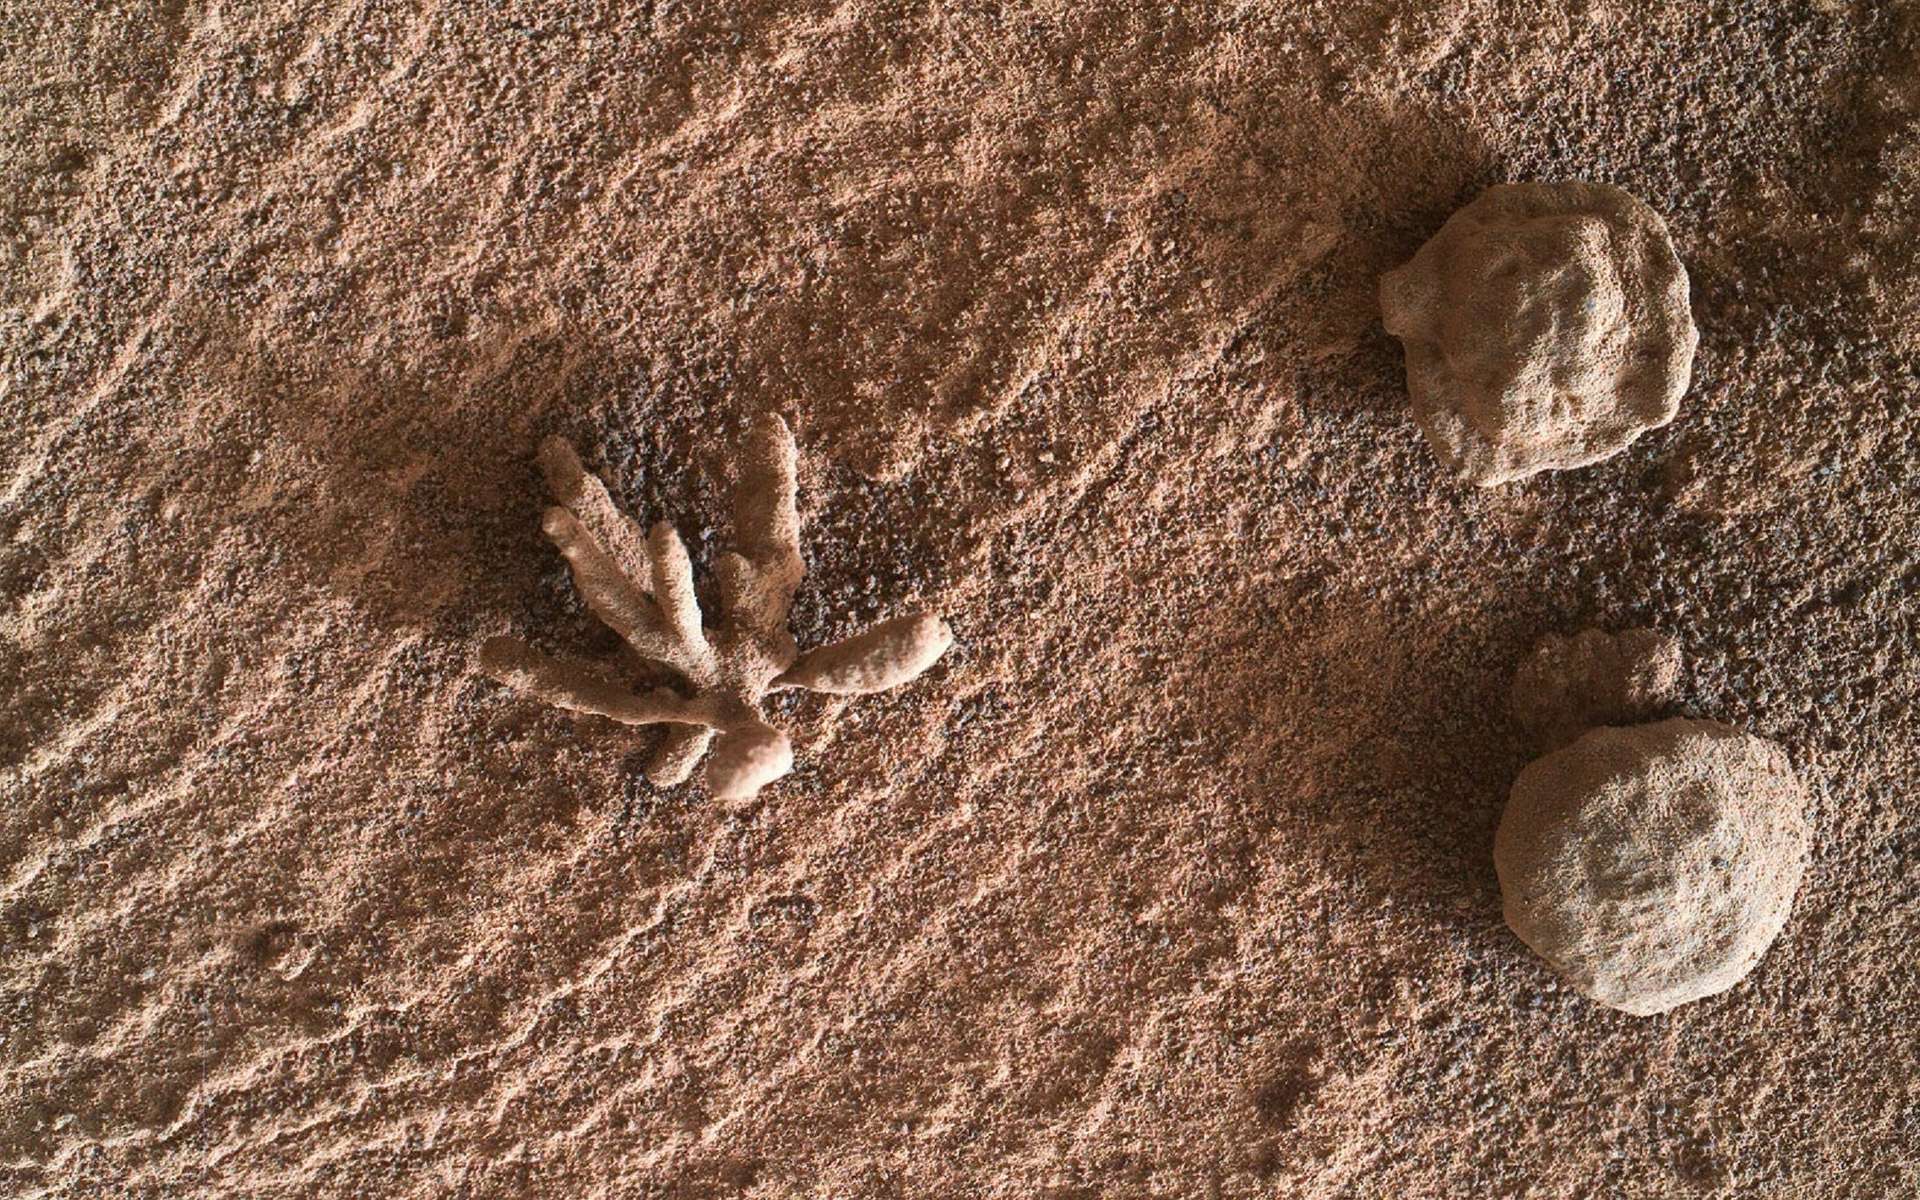 Curiosity discovered a wonderful ‘metallic flower’ on Mars